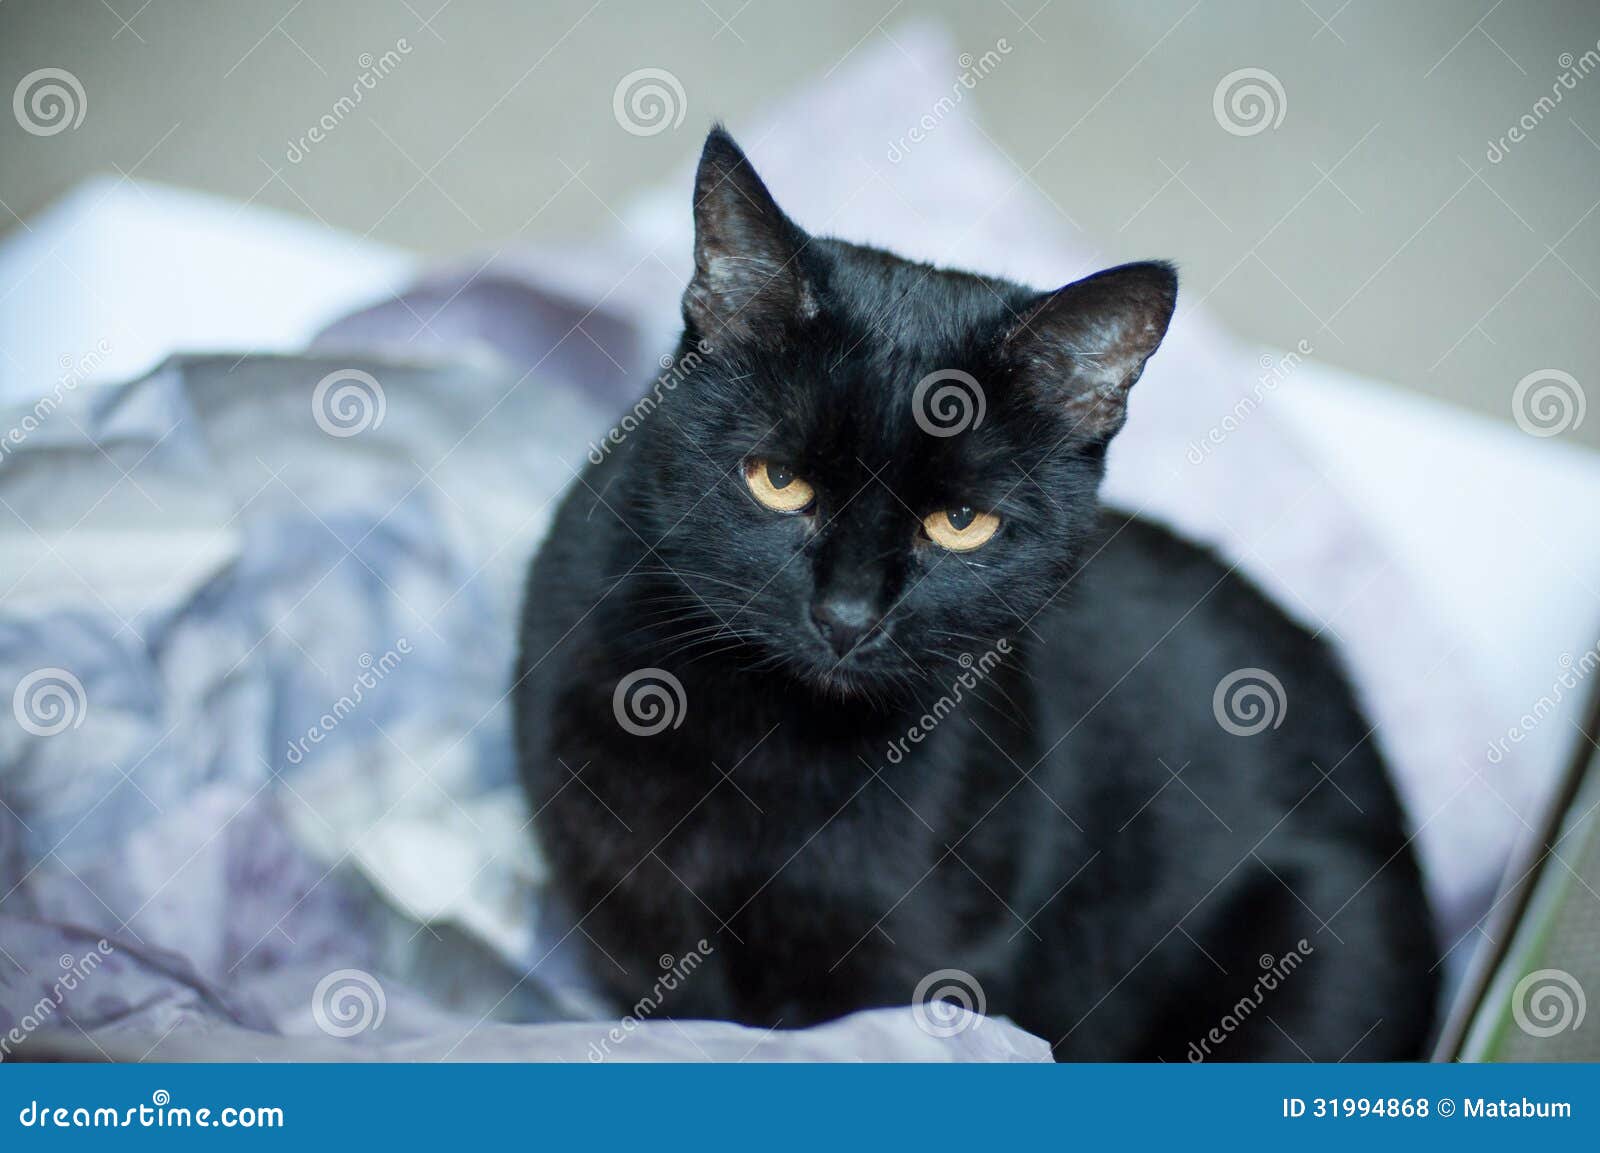 Gato negro peligroso. Detalle del gato negro con los ojos amarillos